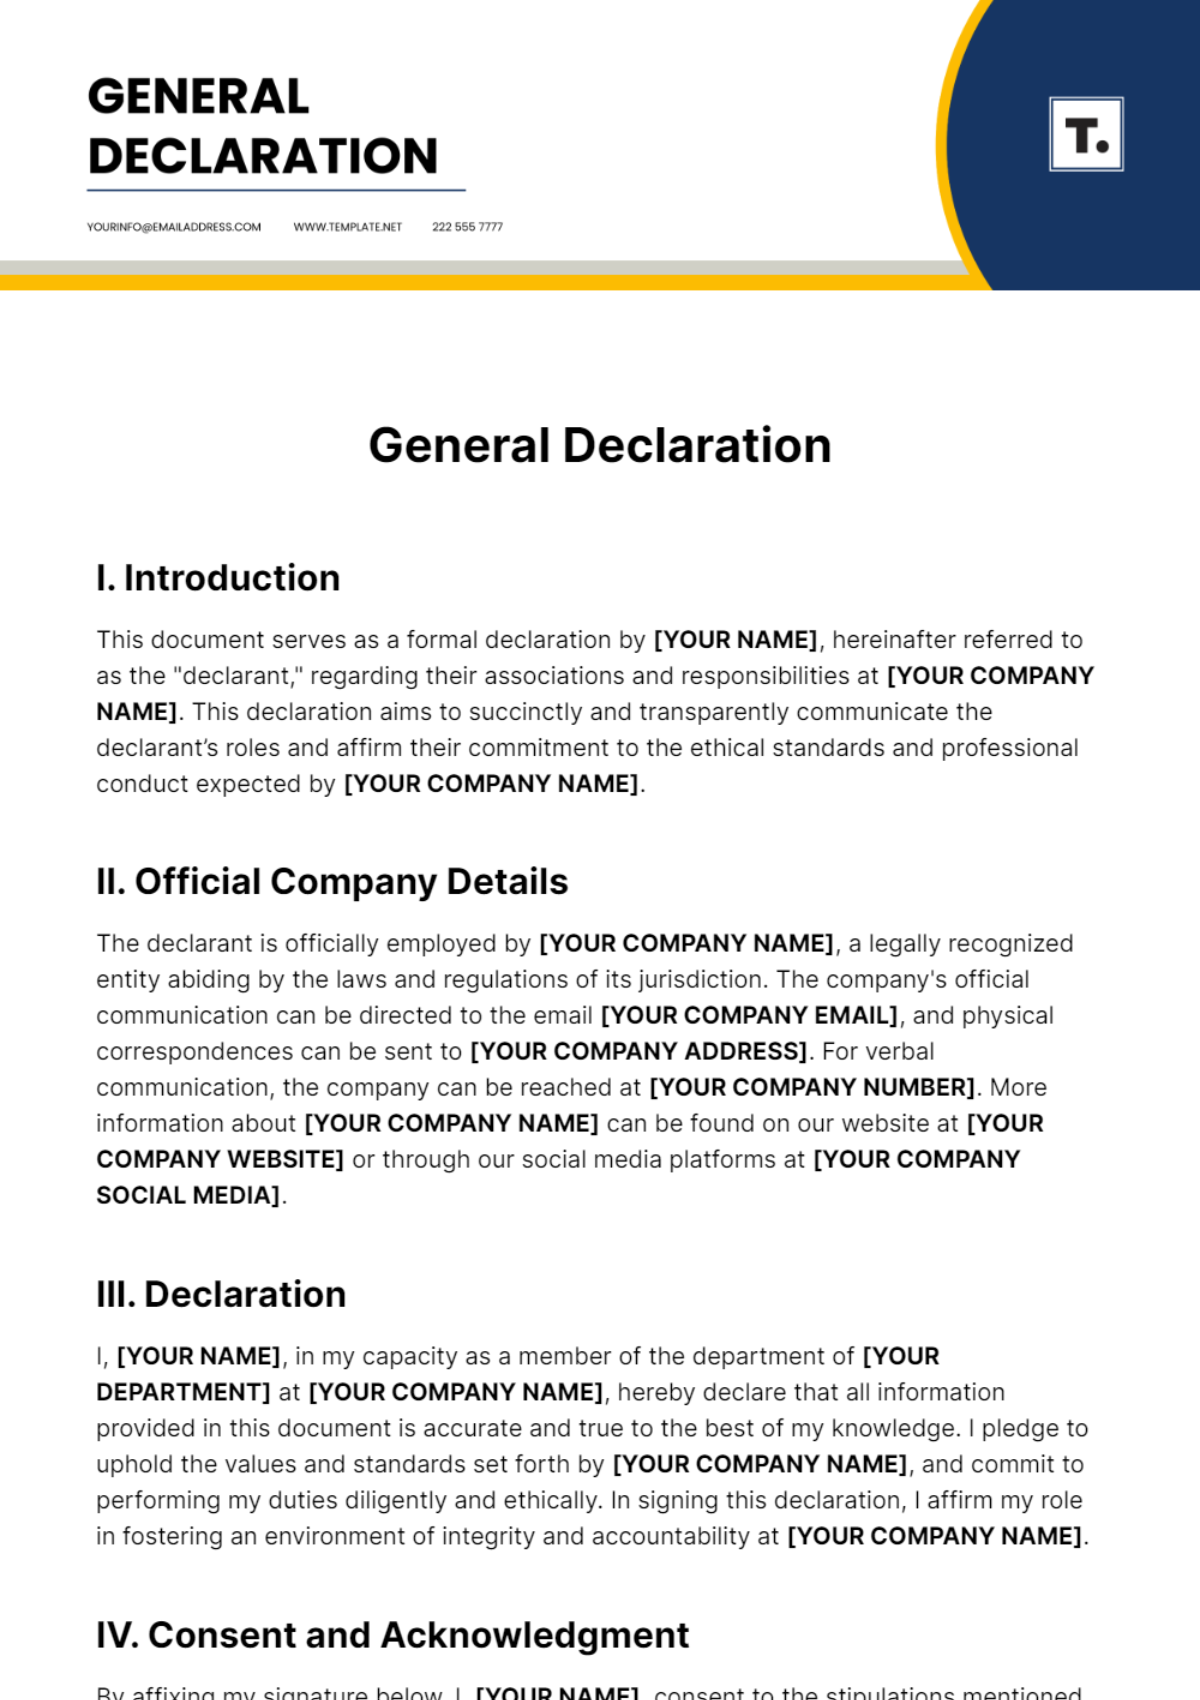 General Declaration Template